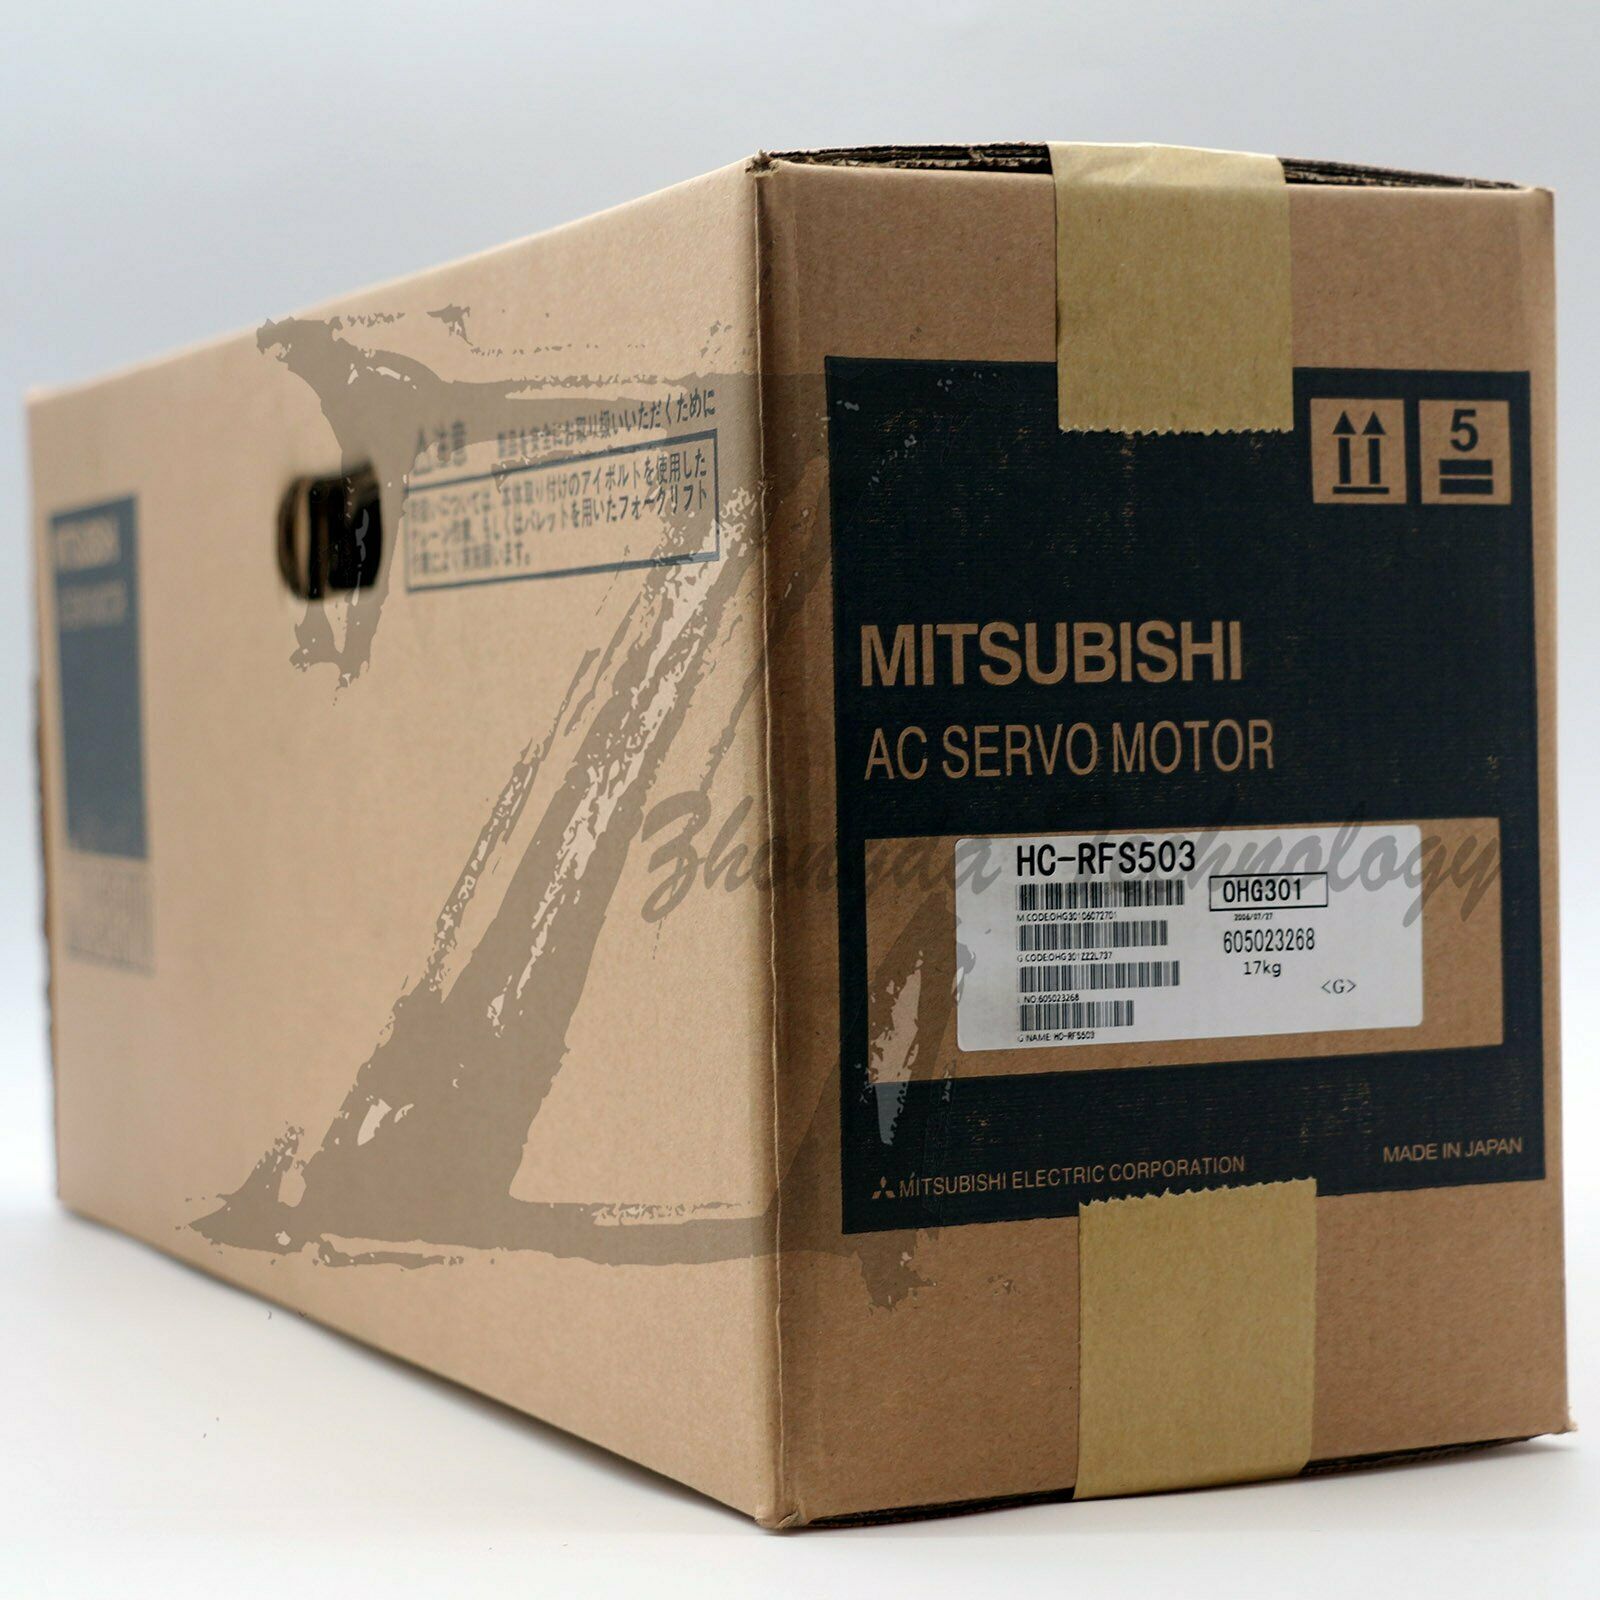 NEW Mitsubishi AC servo motor 127V 28A 5KW 3000RPM HC-RFS503